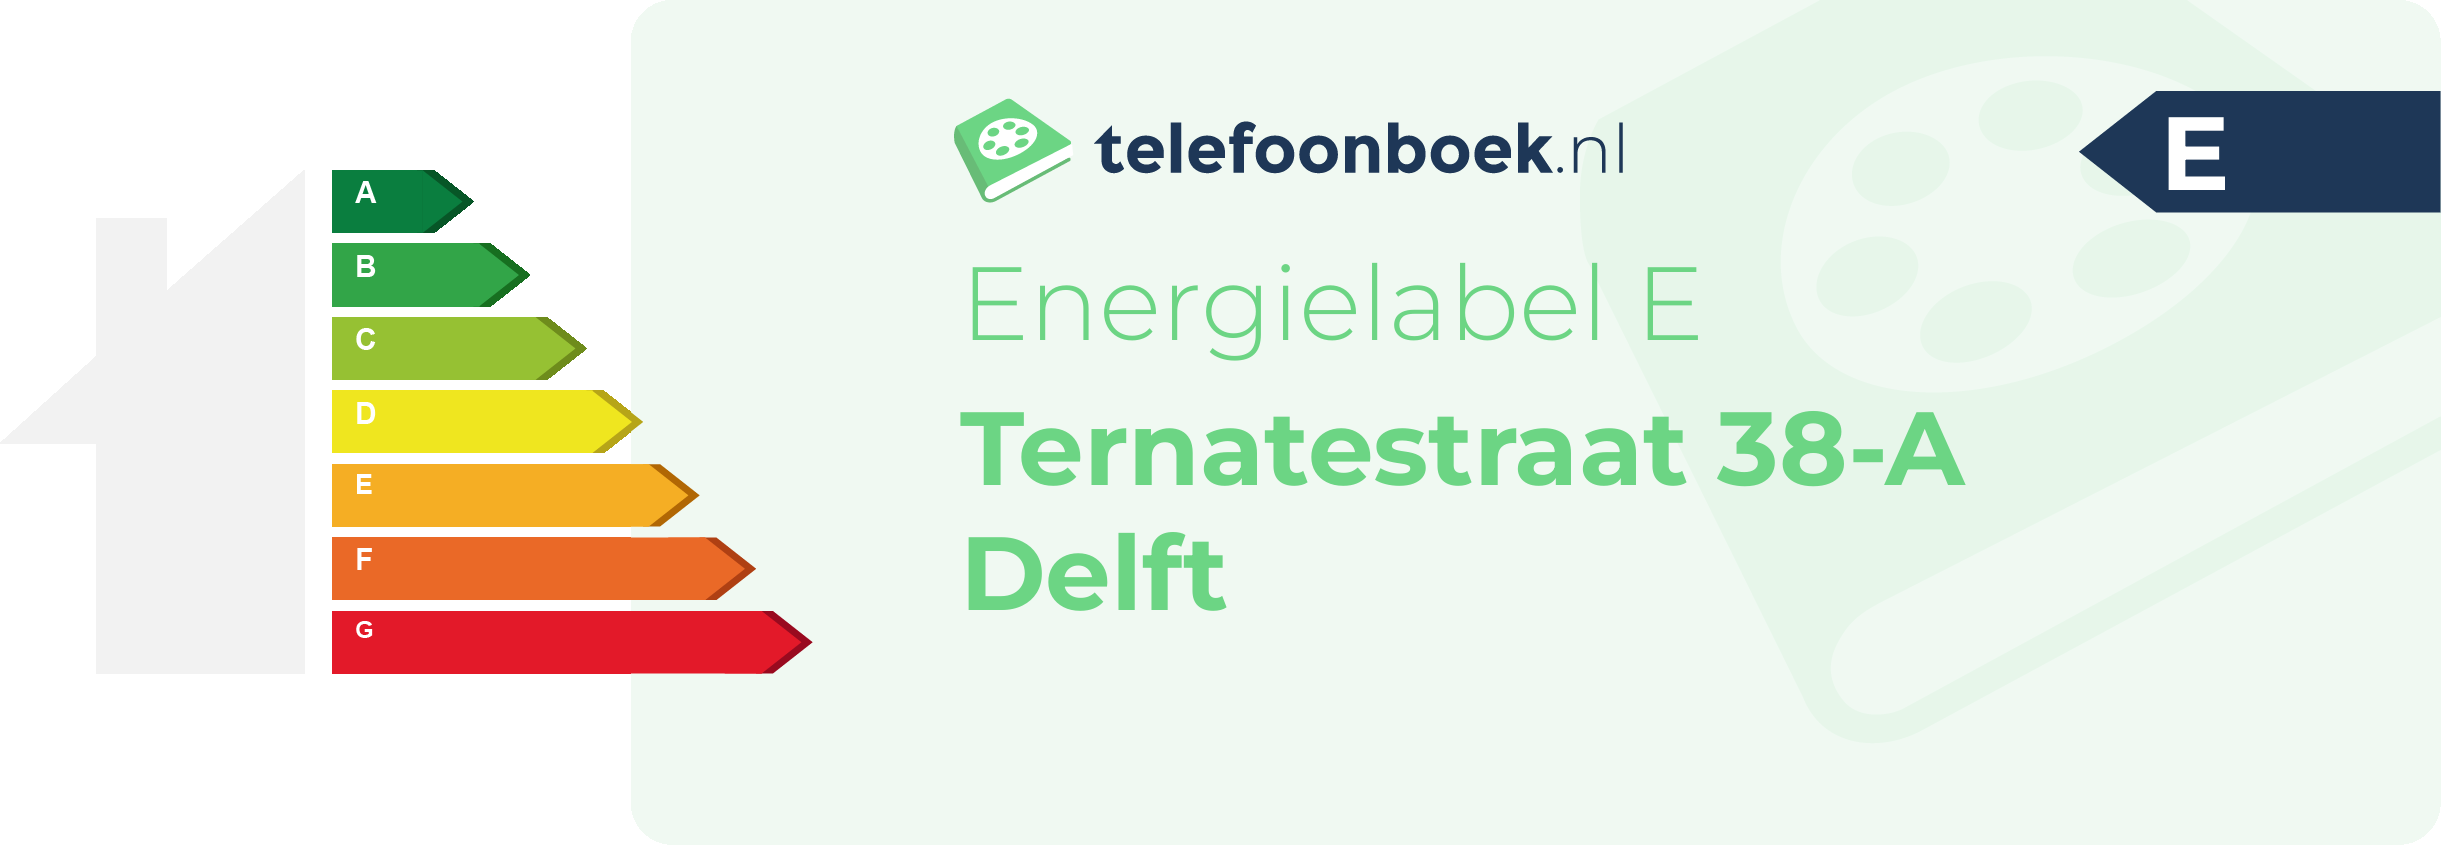 Energielabel Ternatestraat 38-A Delft